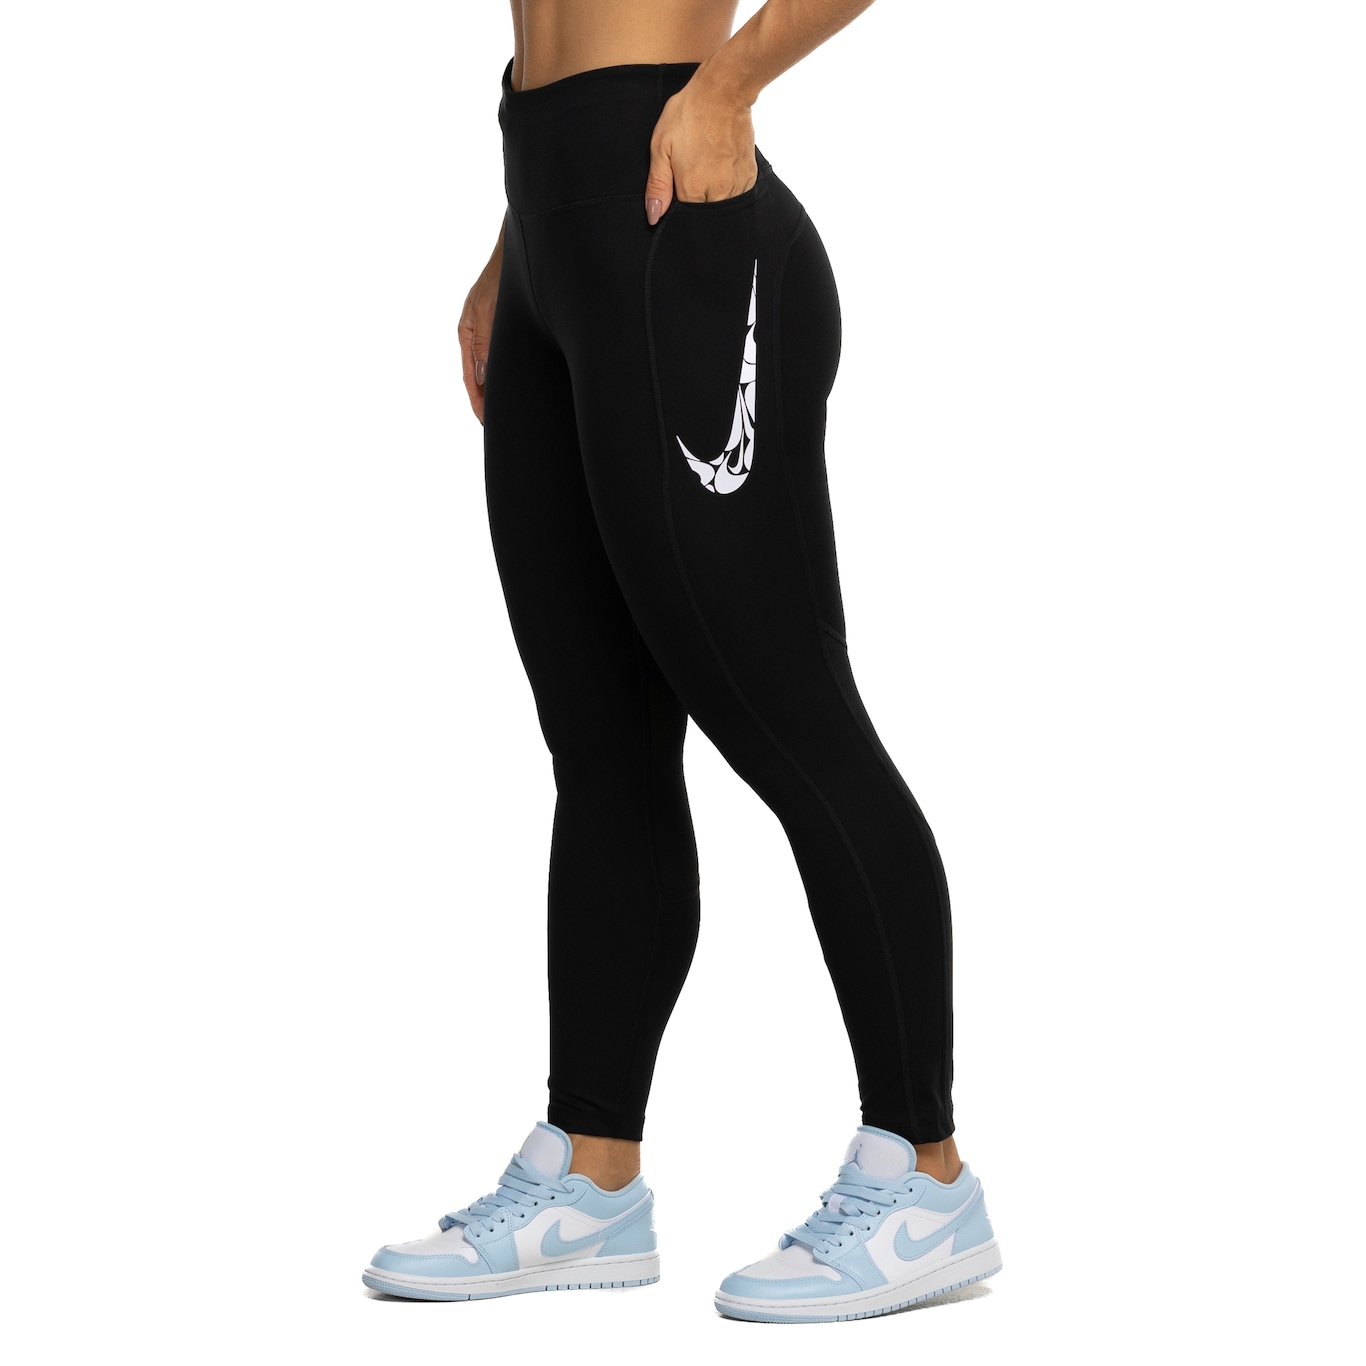 Calça Legging Nike Pro Dri-Fit Tght Mxny Feminina - Preta - Bayard Esportes